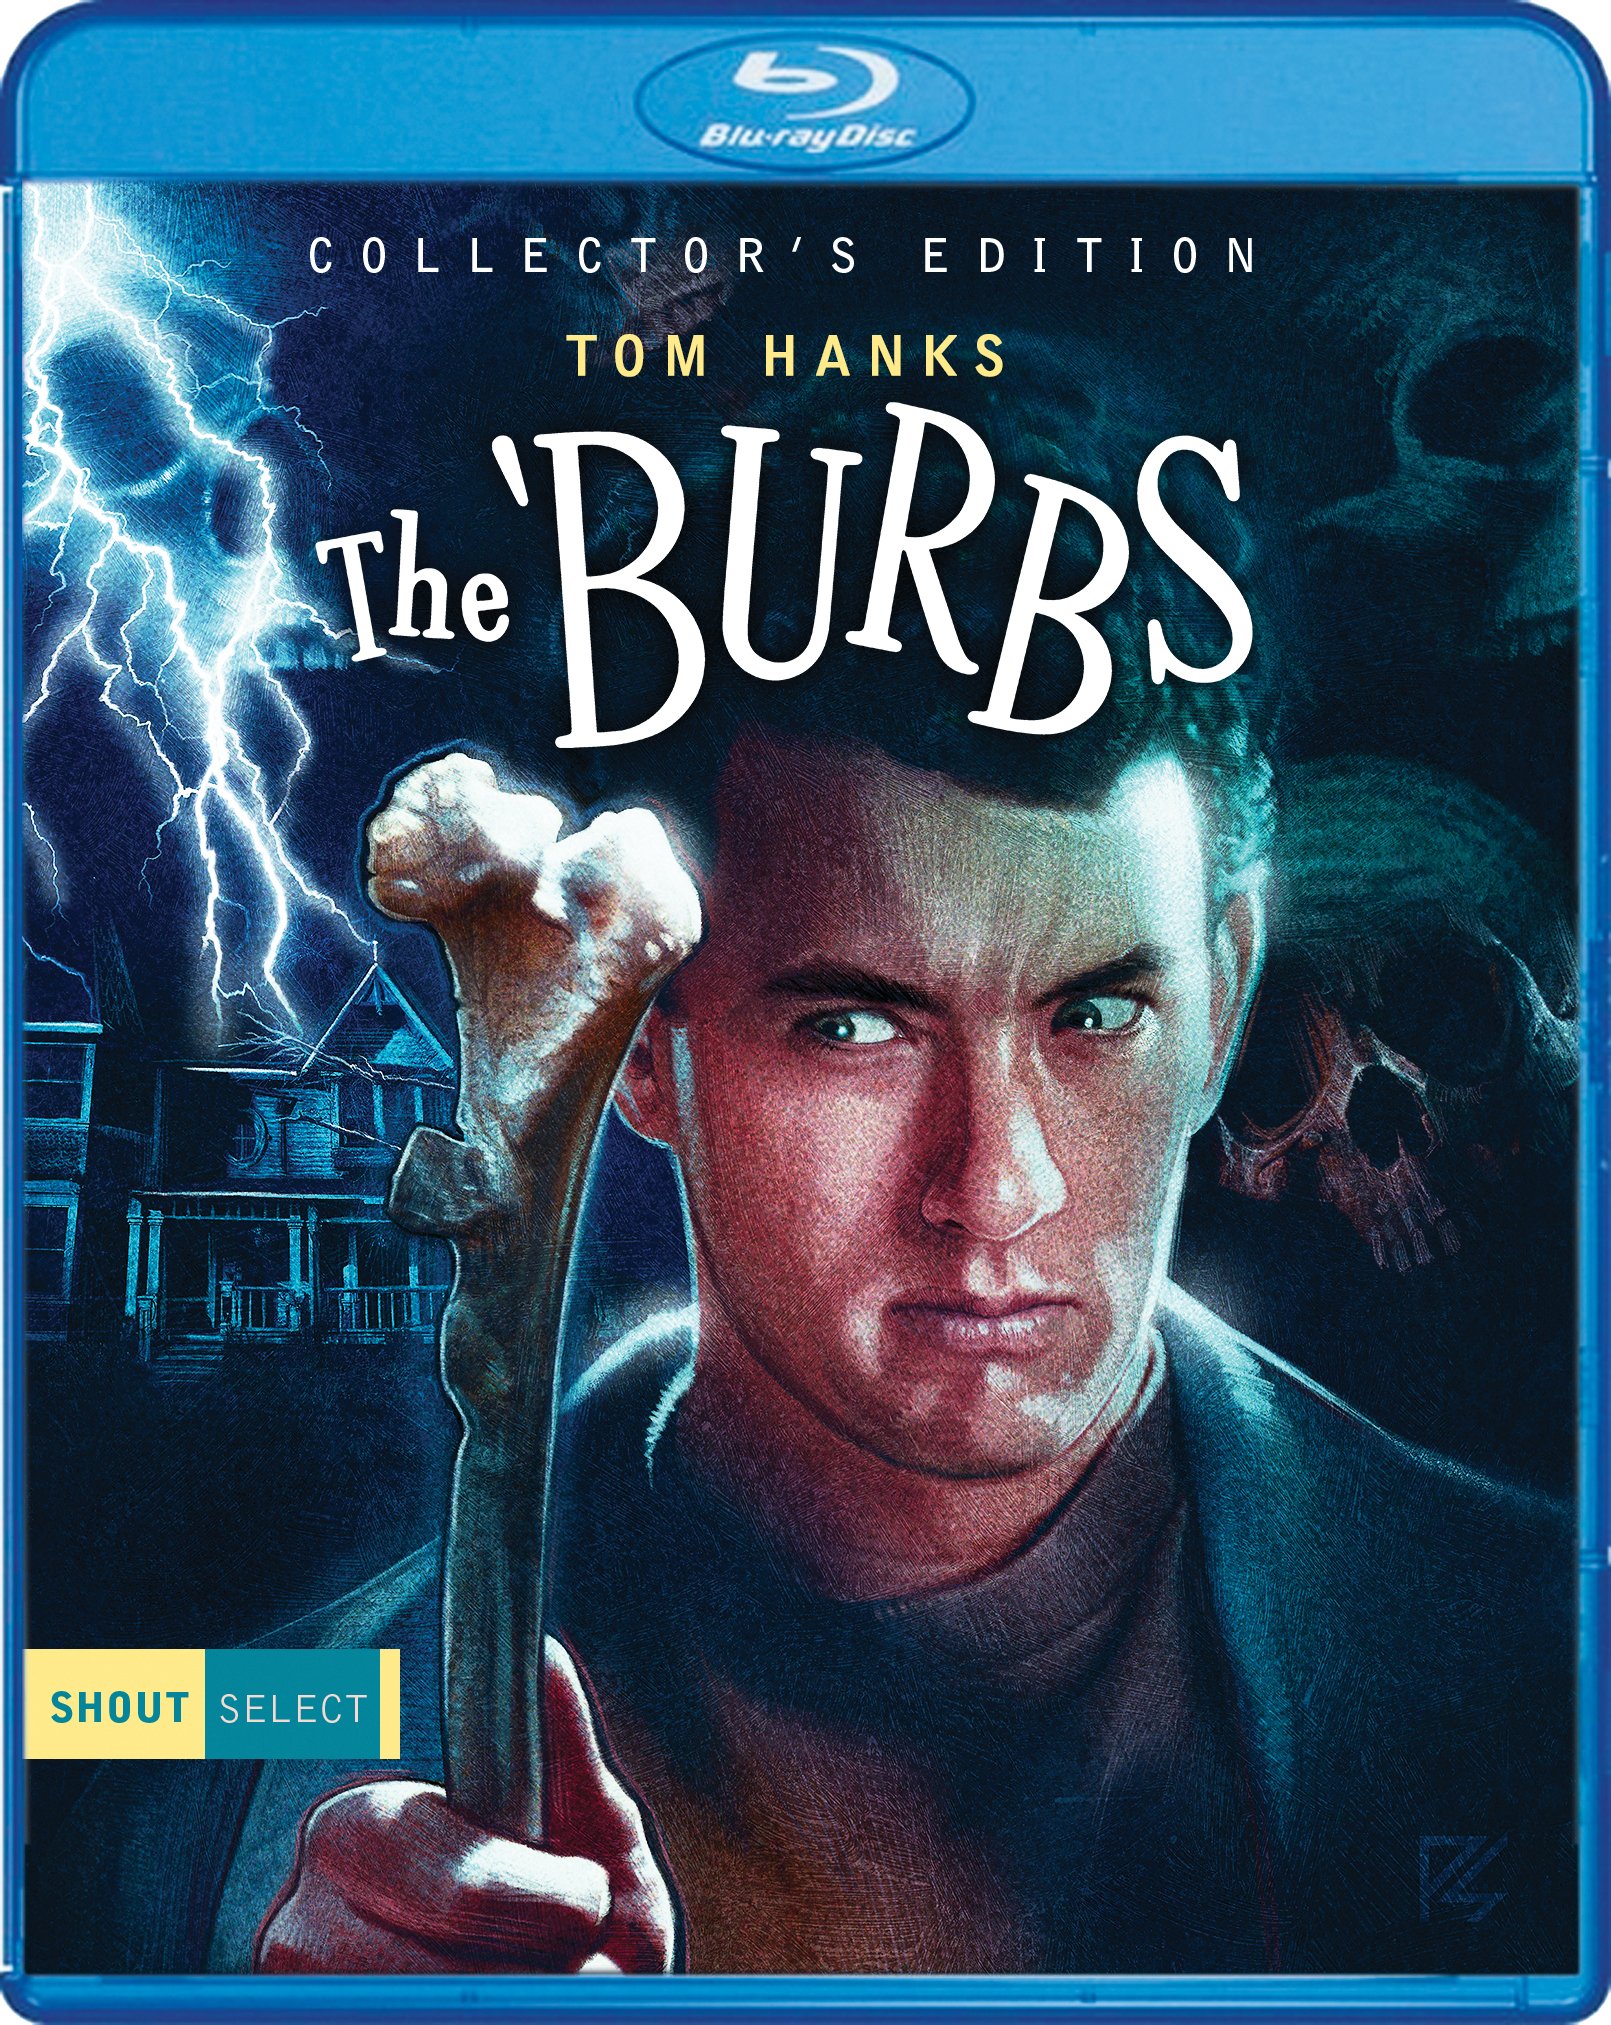 The 'Burbs (1989) - IMDb